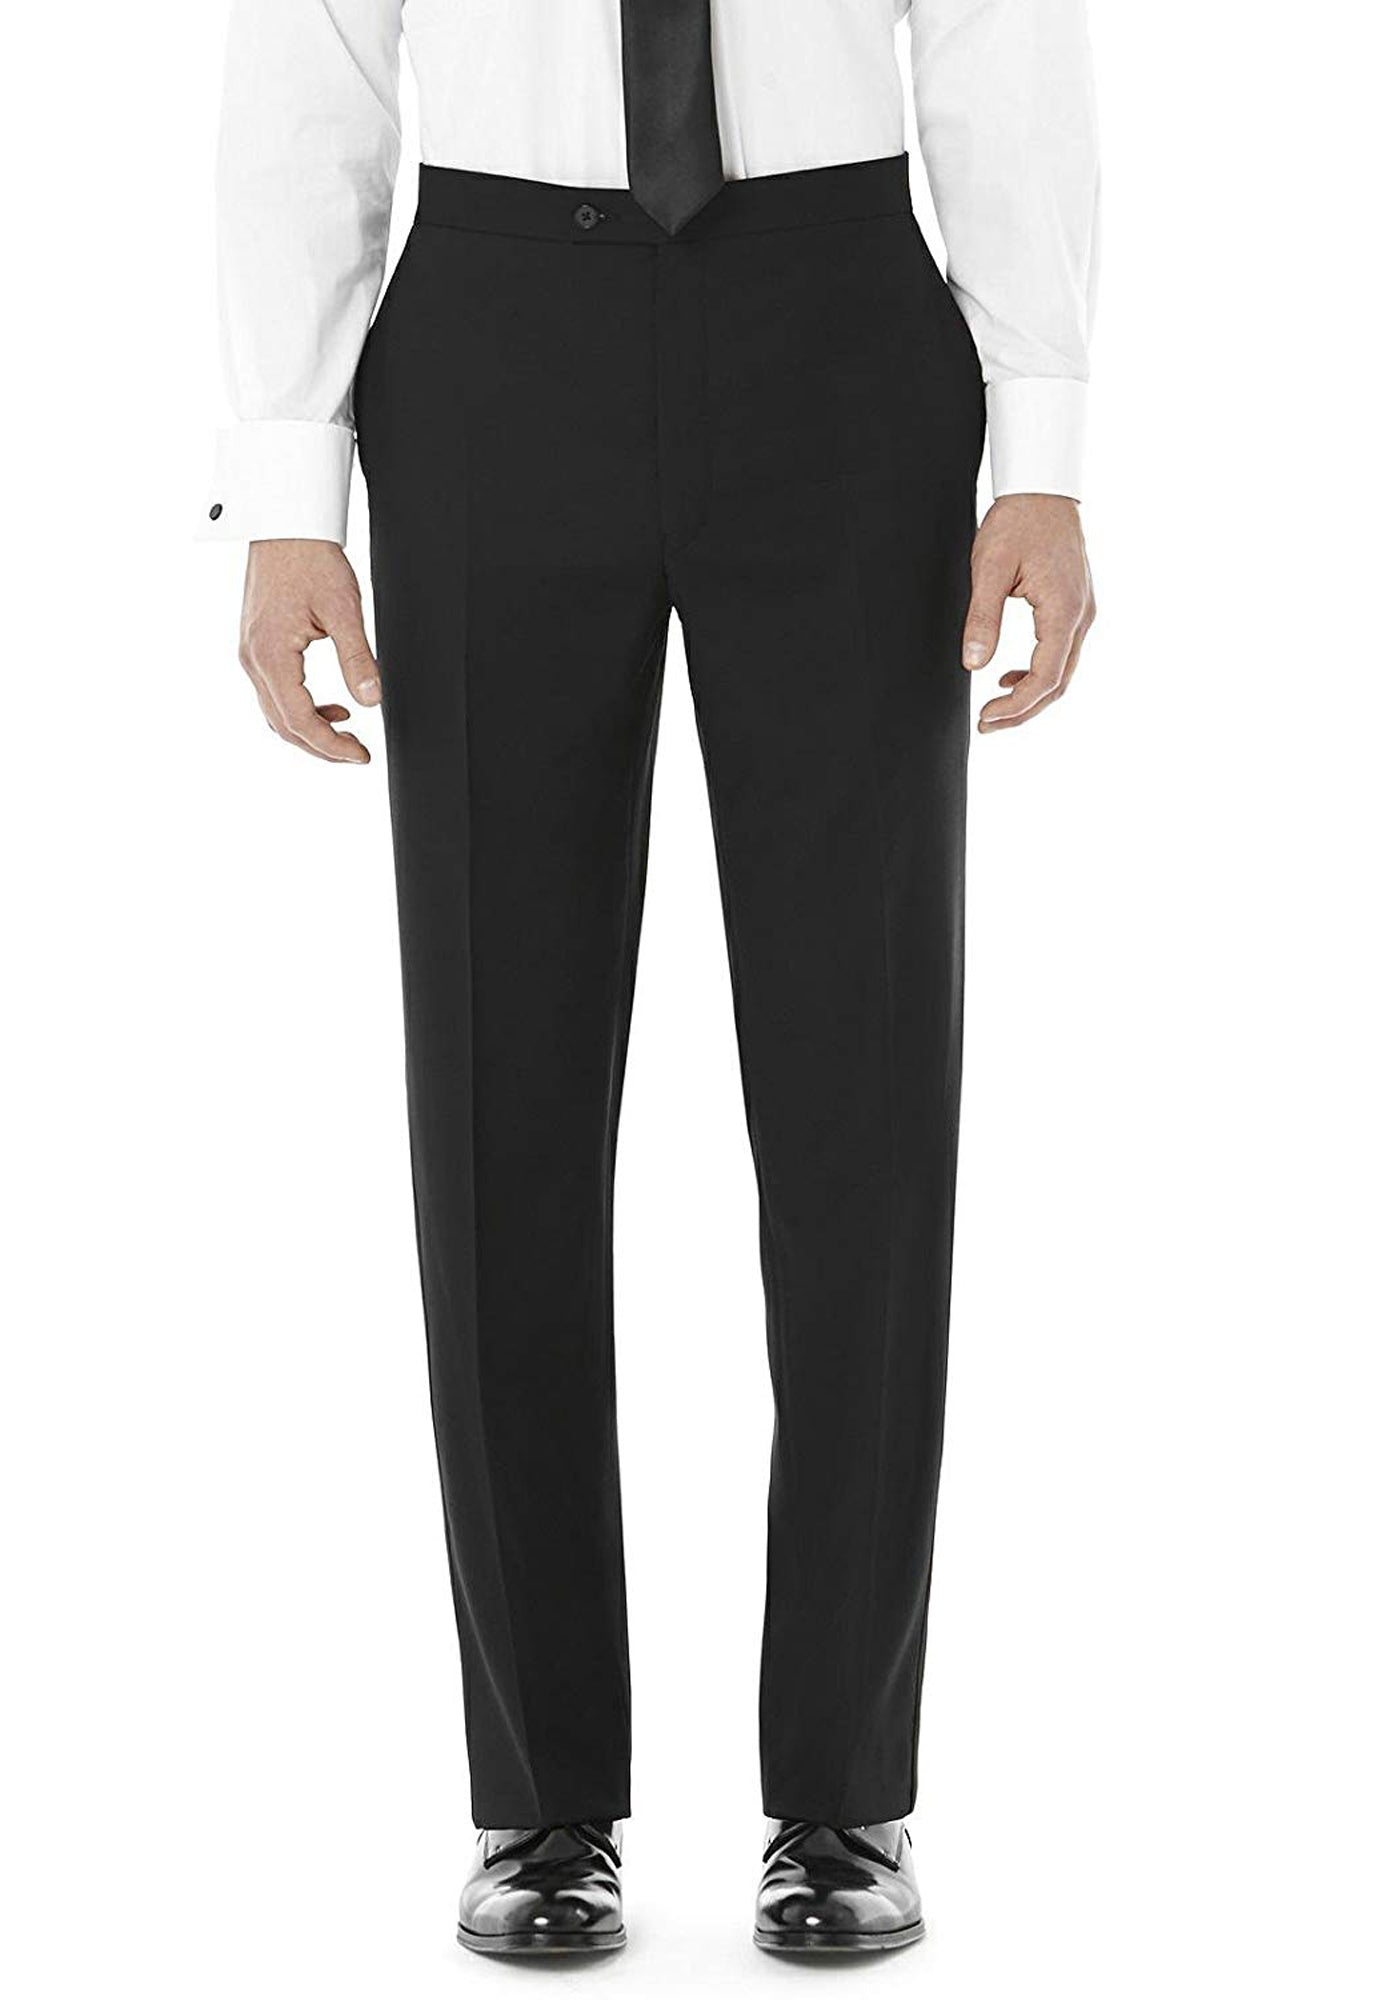 Henry Segal Women's Customizable Black Flat Front Low-Rise Tuxedo Pants - 06